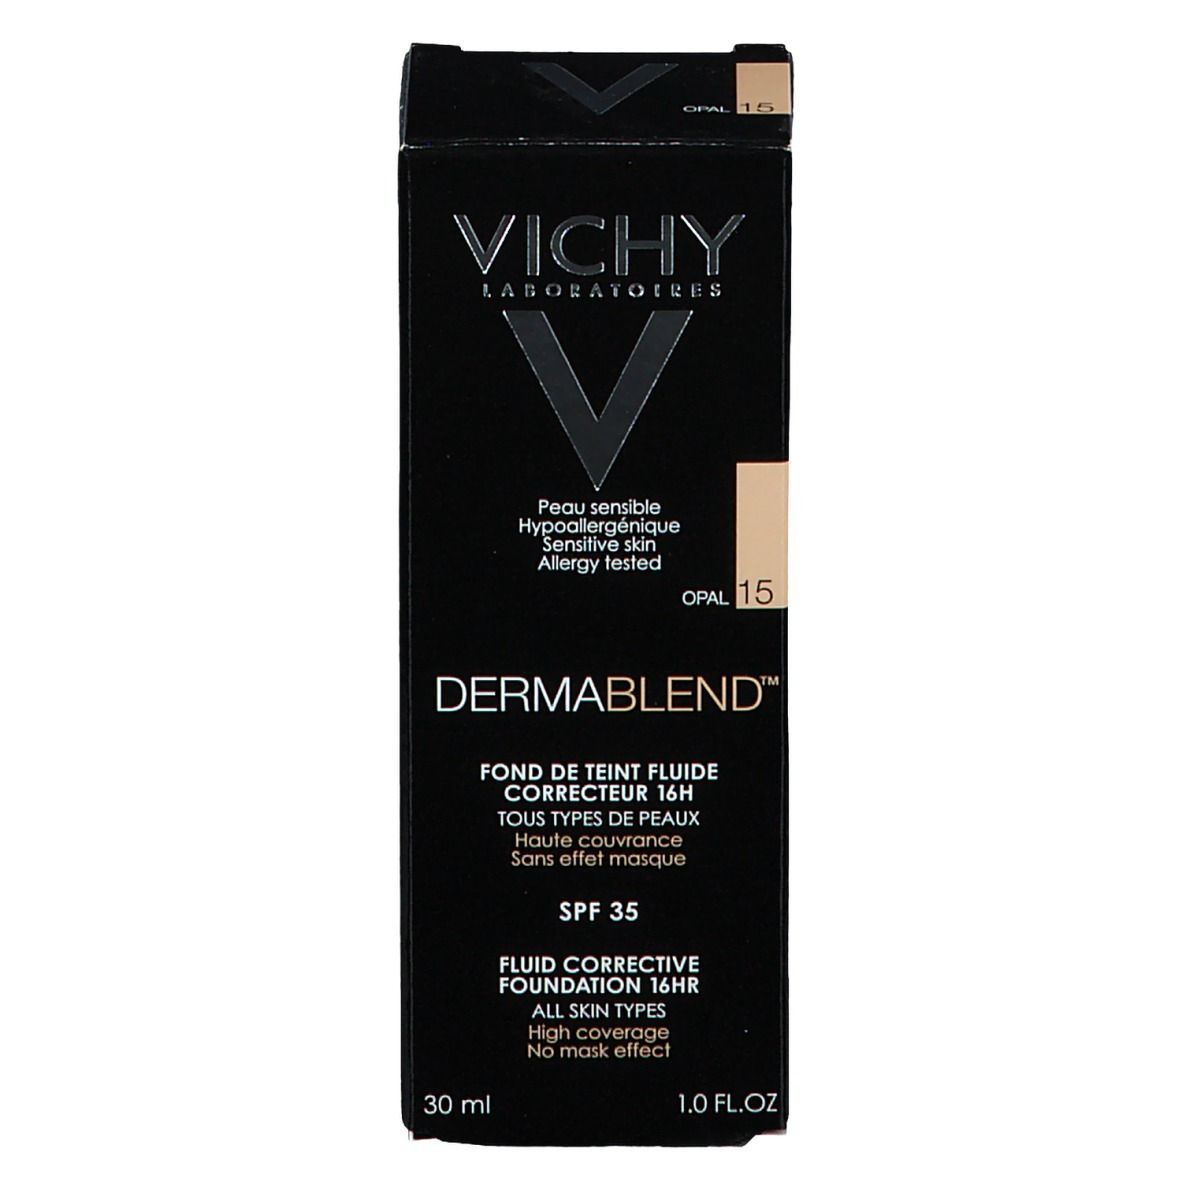 Vichy Dermablend Fondotinta Correttore Fluido 16h tonalità 15 30 ml